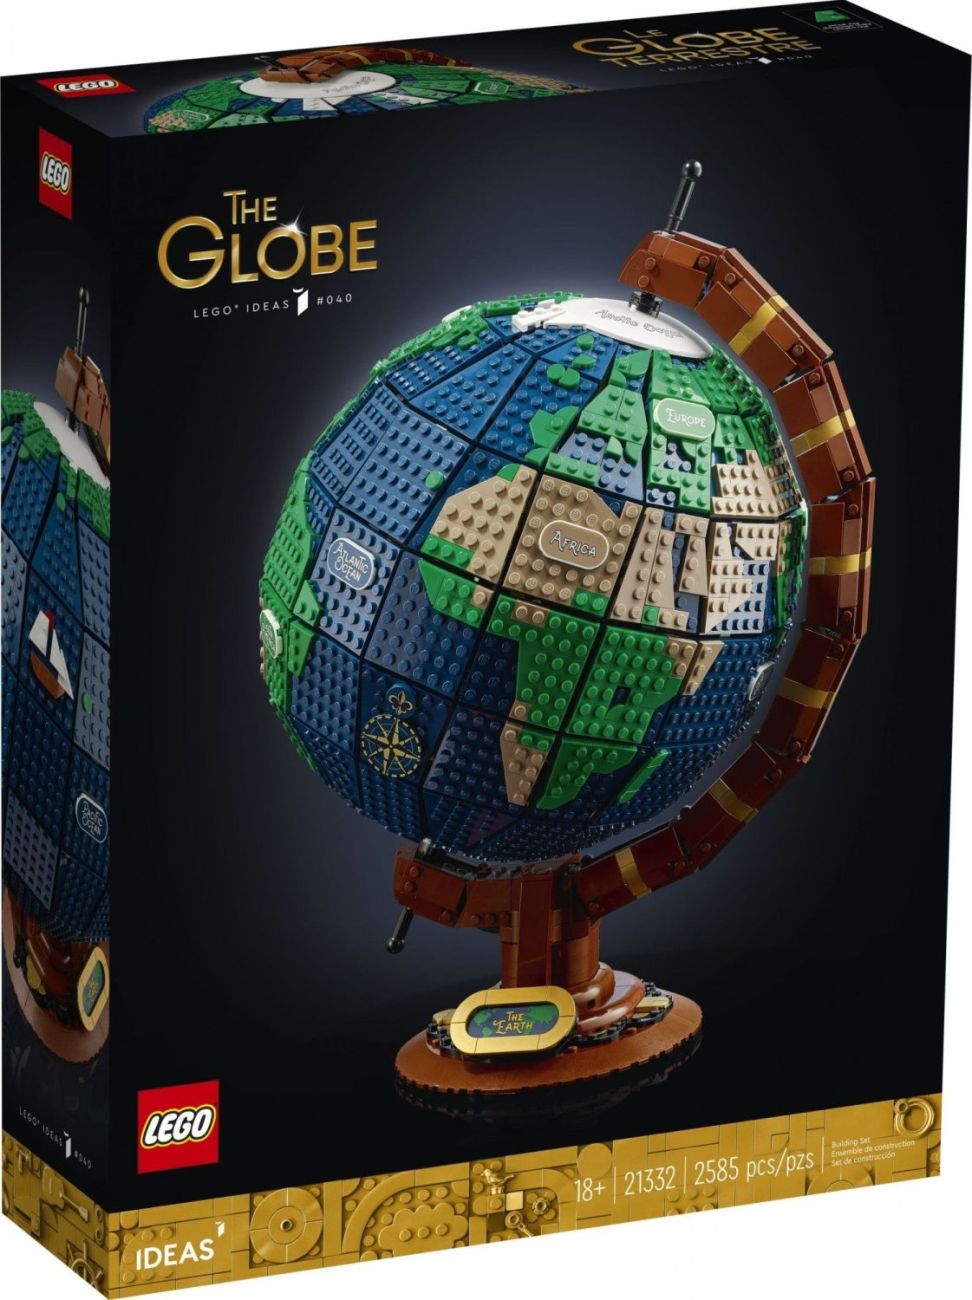 LEGO 21332 Globus: Erster Blick auf neues Ideas Set